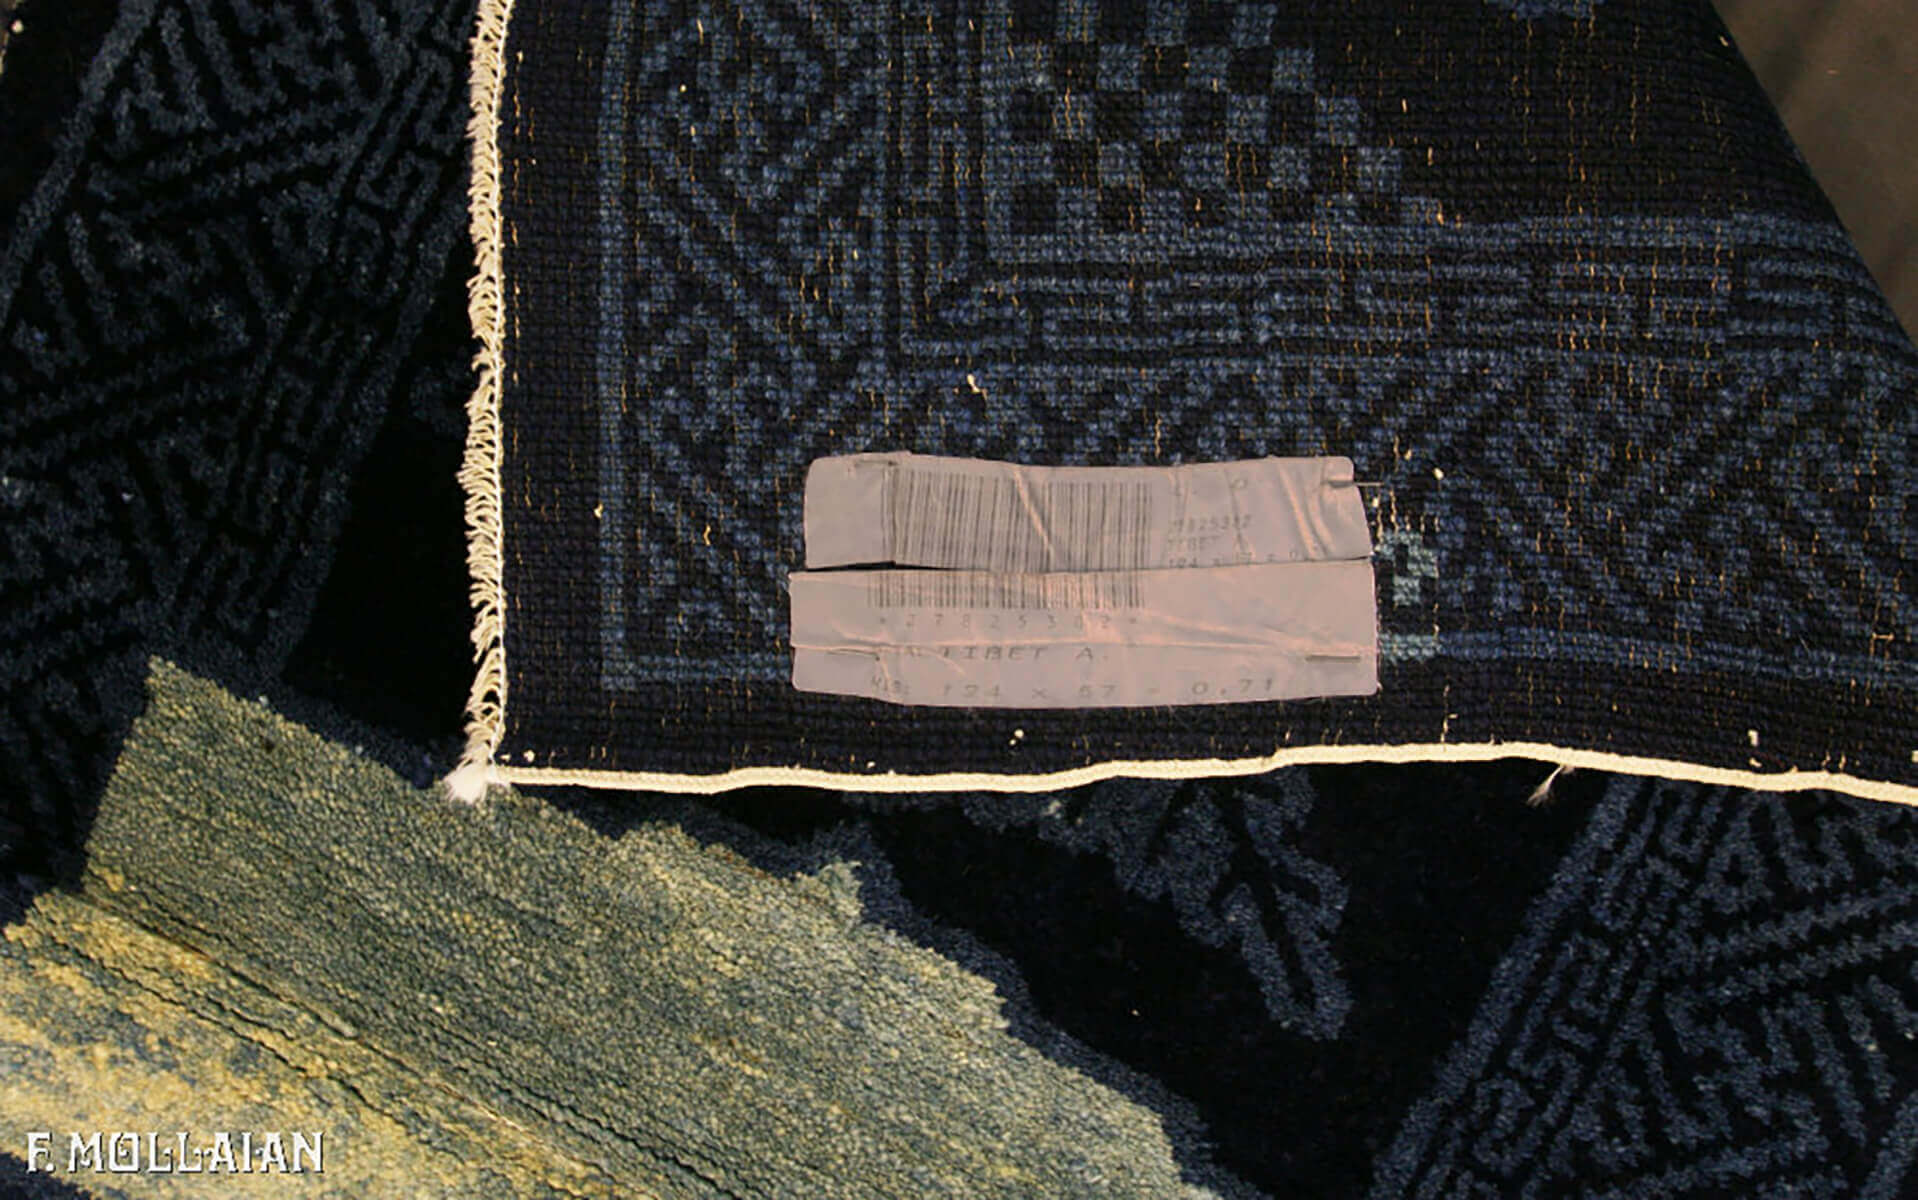 Teppich Semi-Antiker Tibet n°:27825382